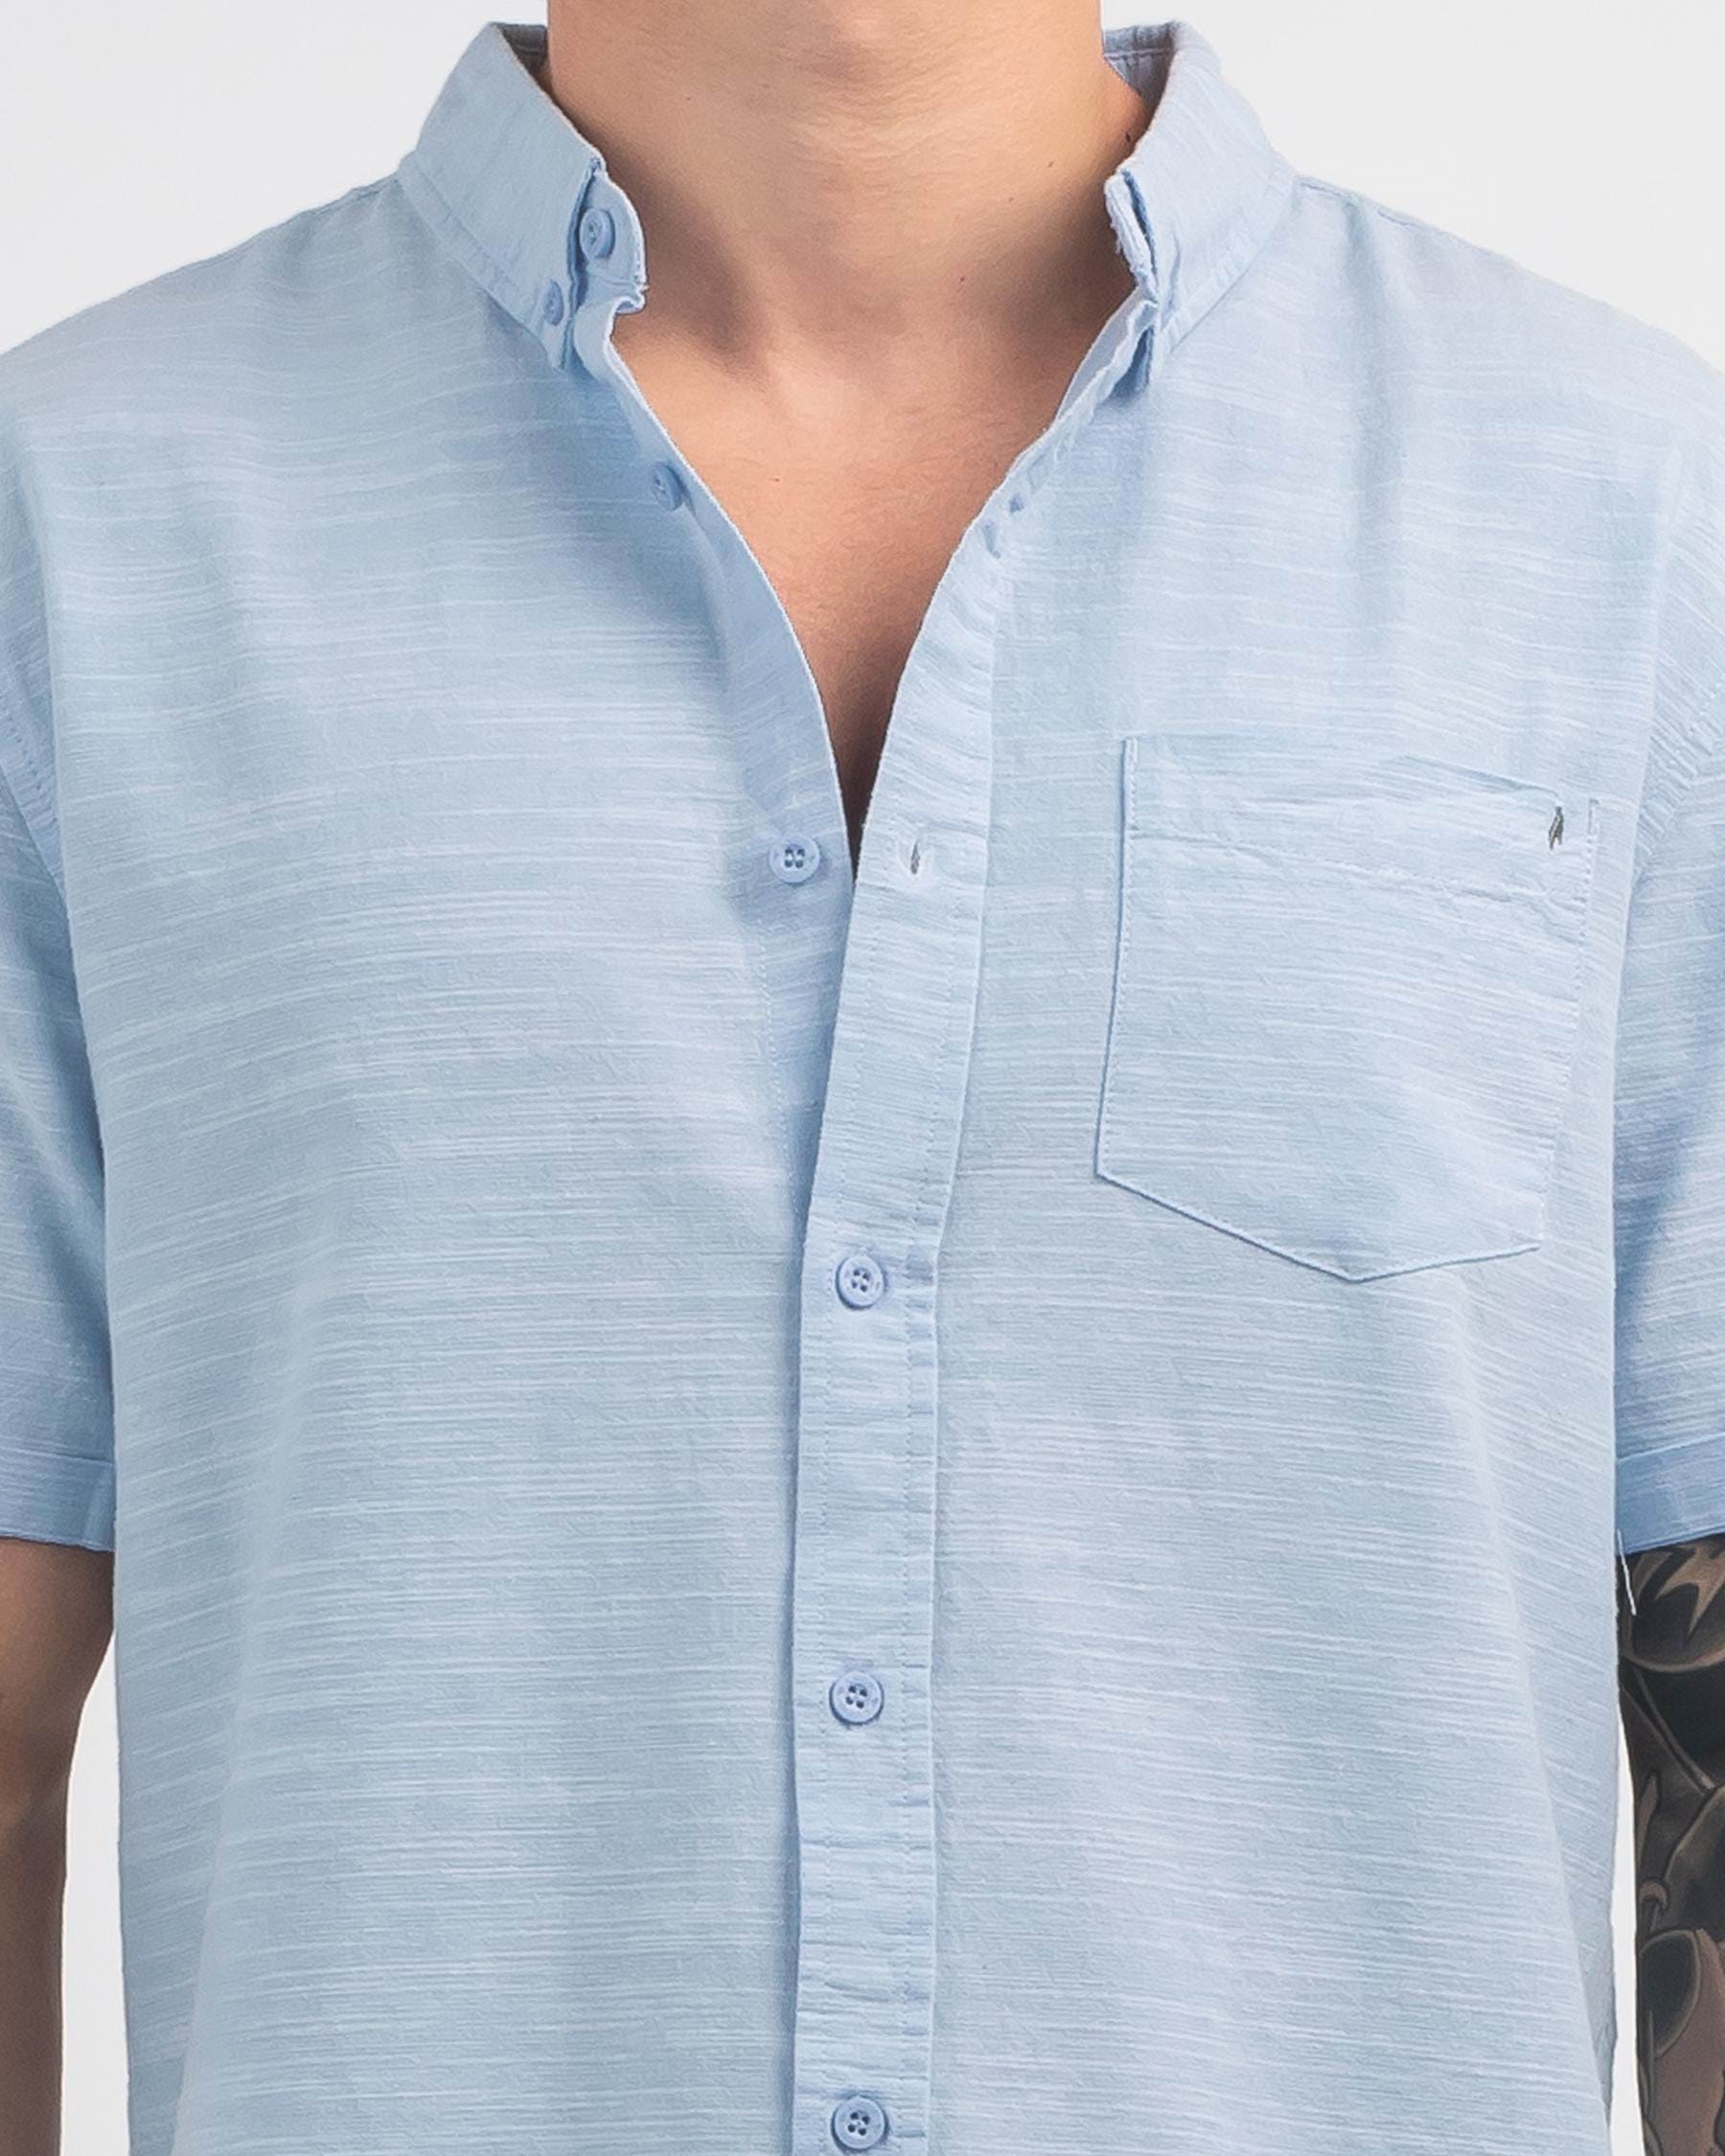 Lucid Virtues Short Sleeved Shirt In Light Blue - Fast Shipping & Easy ...